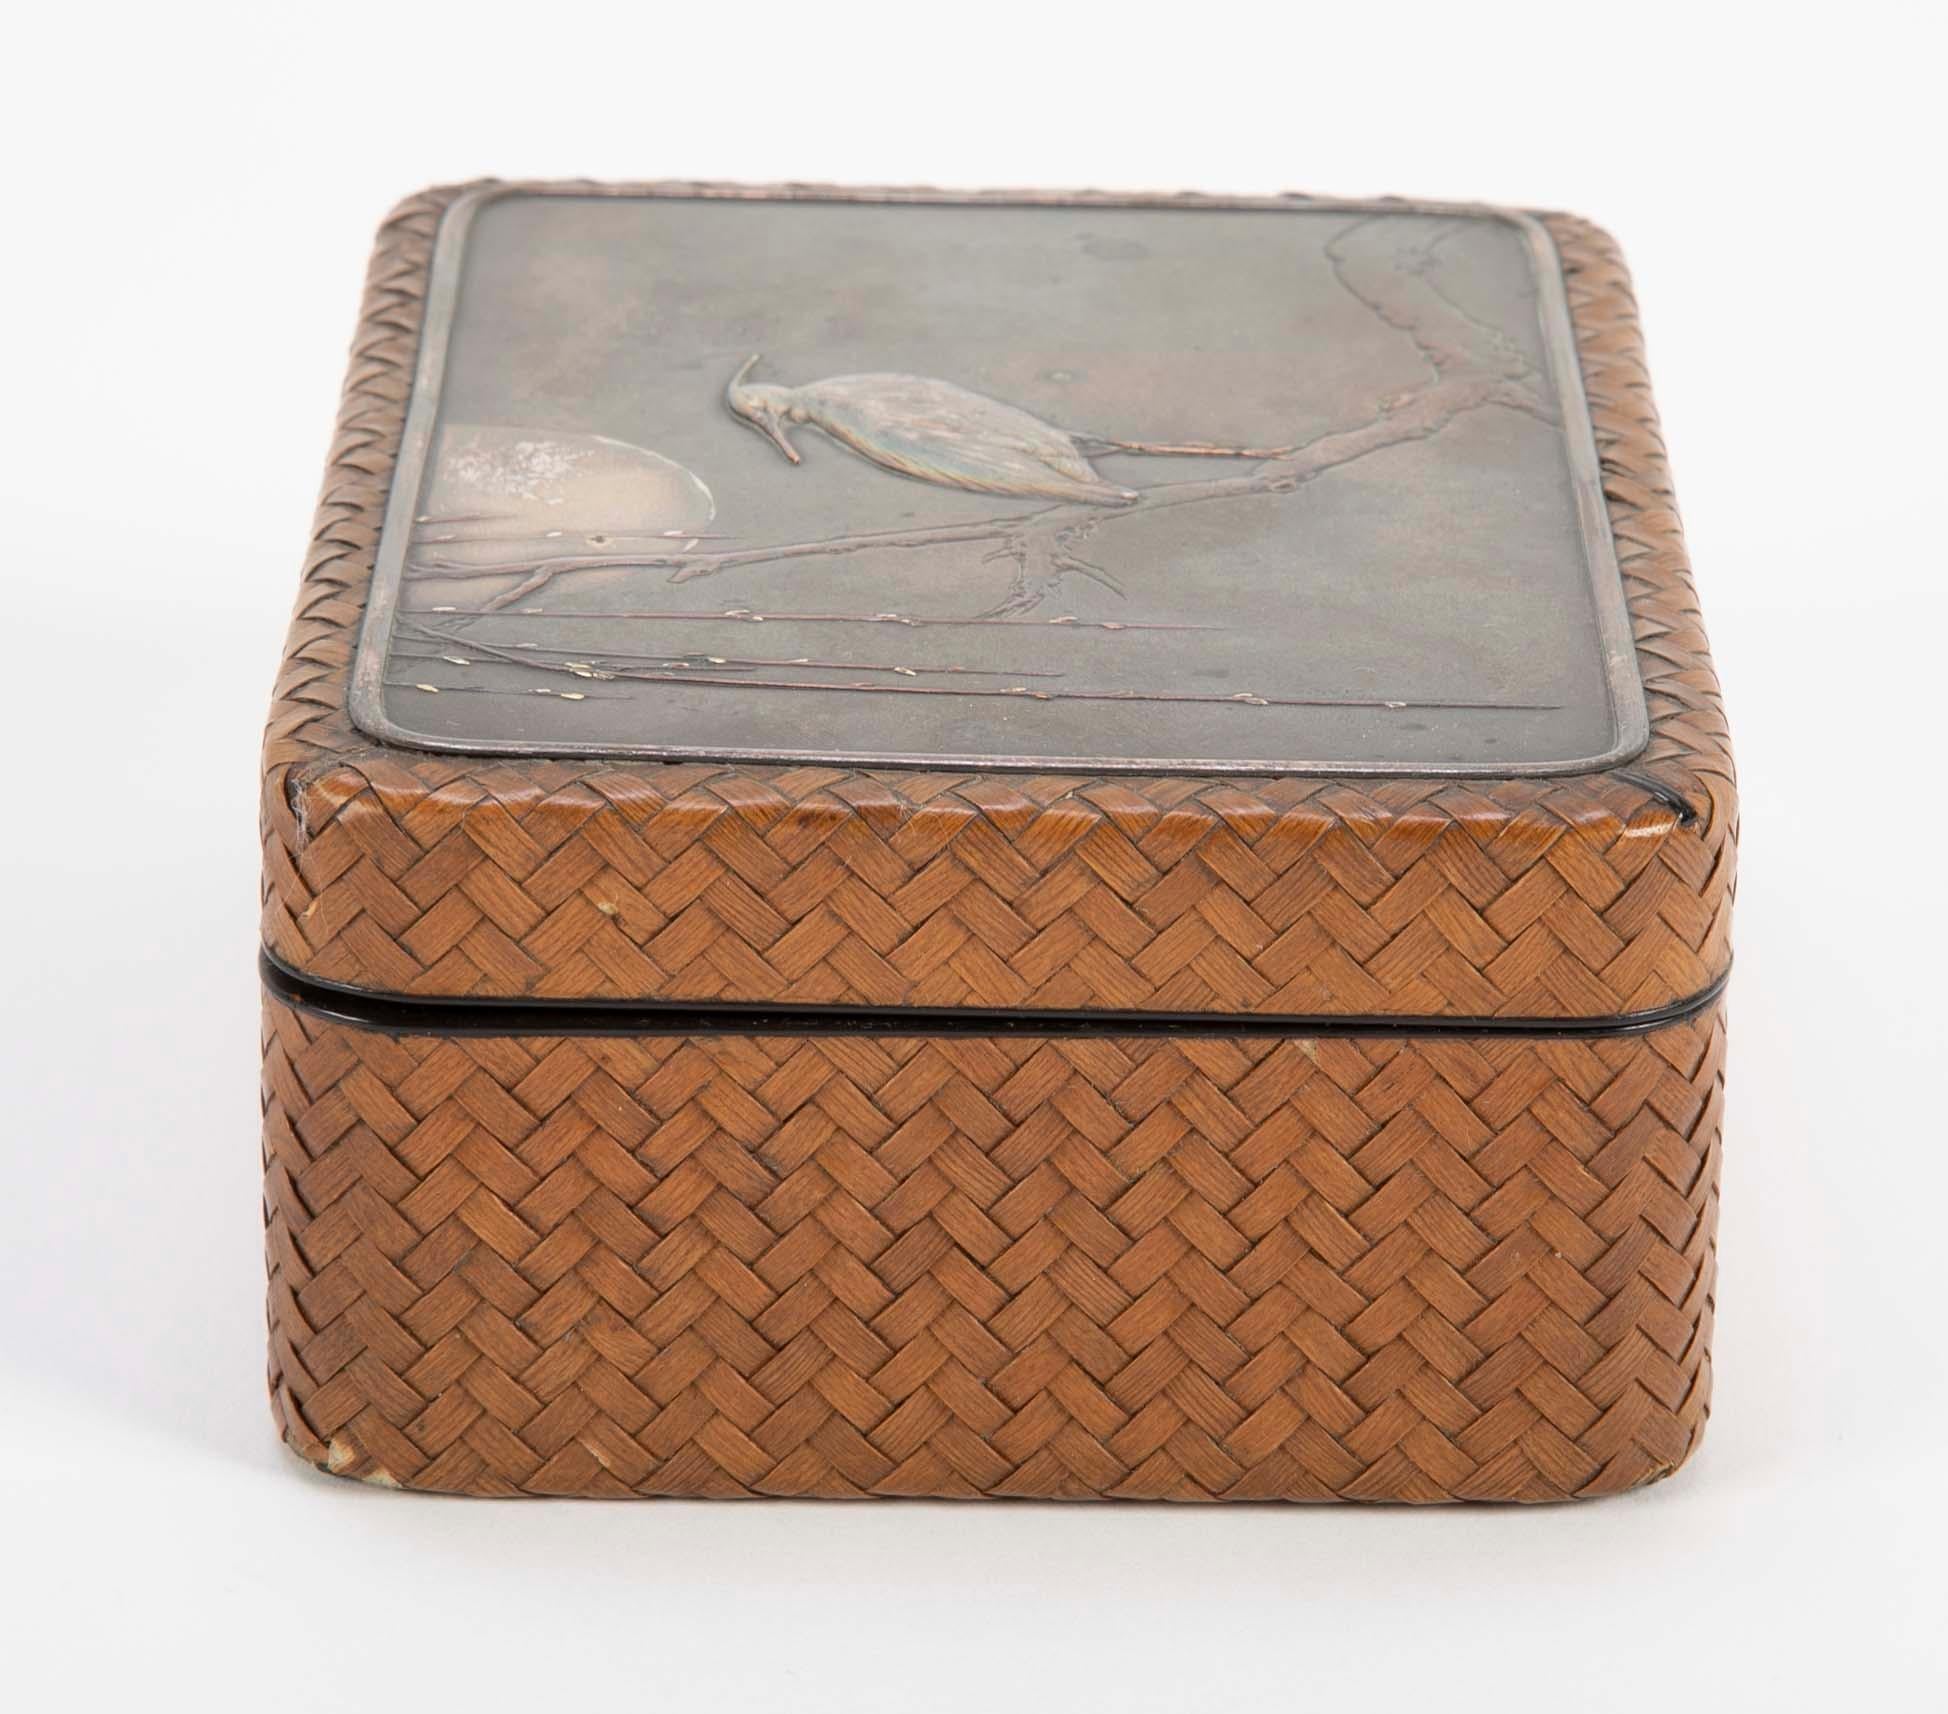 Japanese Meiji Period Box of Woven Cane, Lacquer, Silver & Copper 1